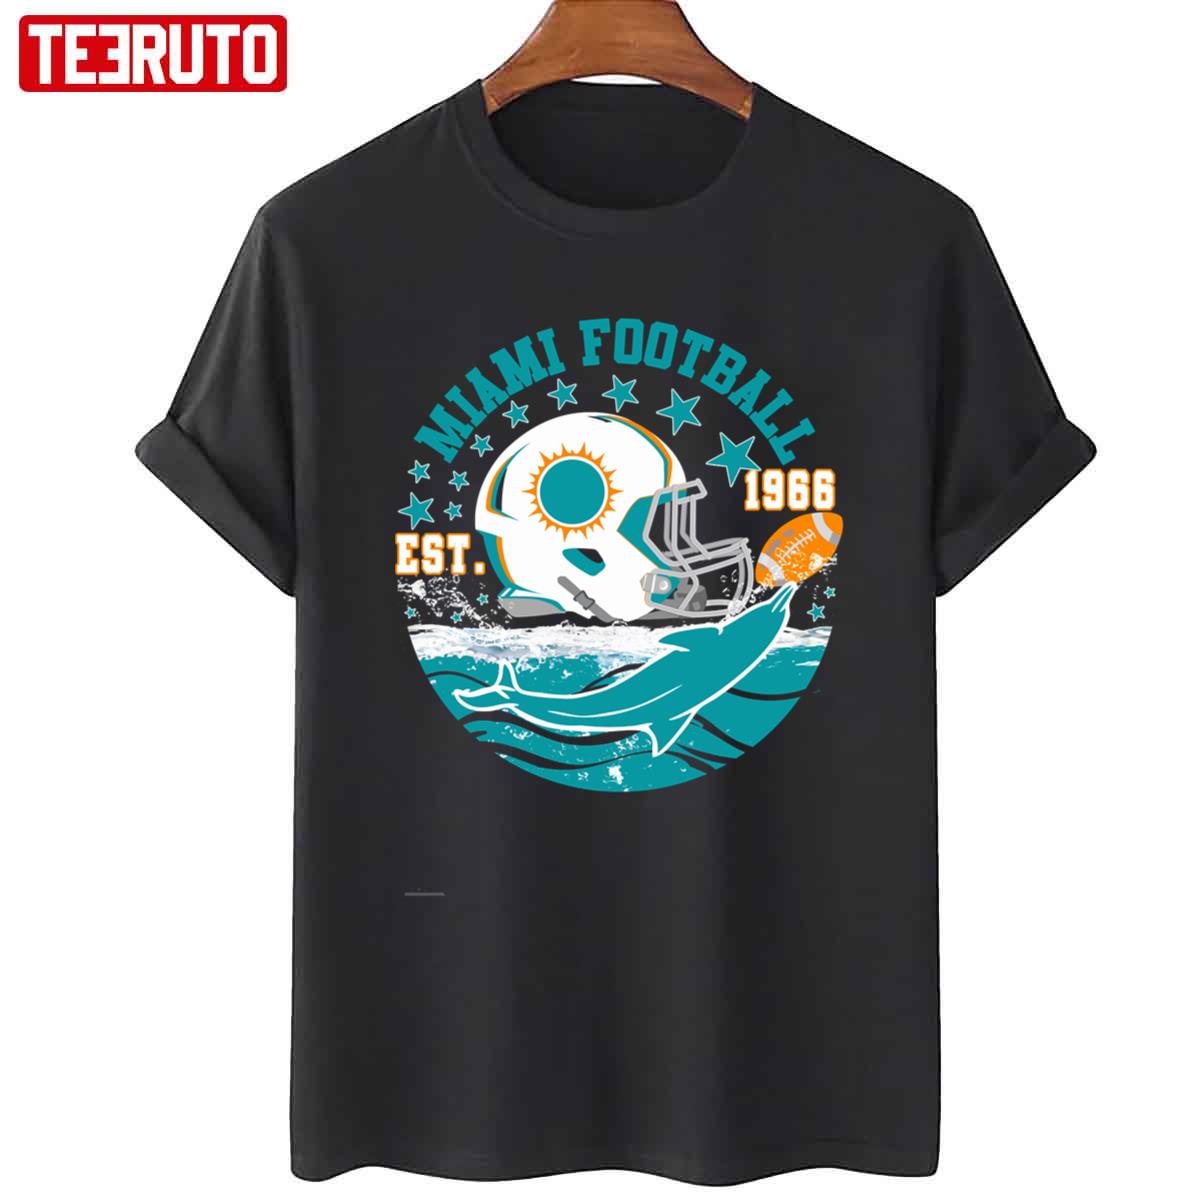 Est 1966 Miami Football Helmet Novelty Dolphin Sports Unisex Sweatshirt